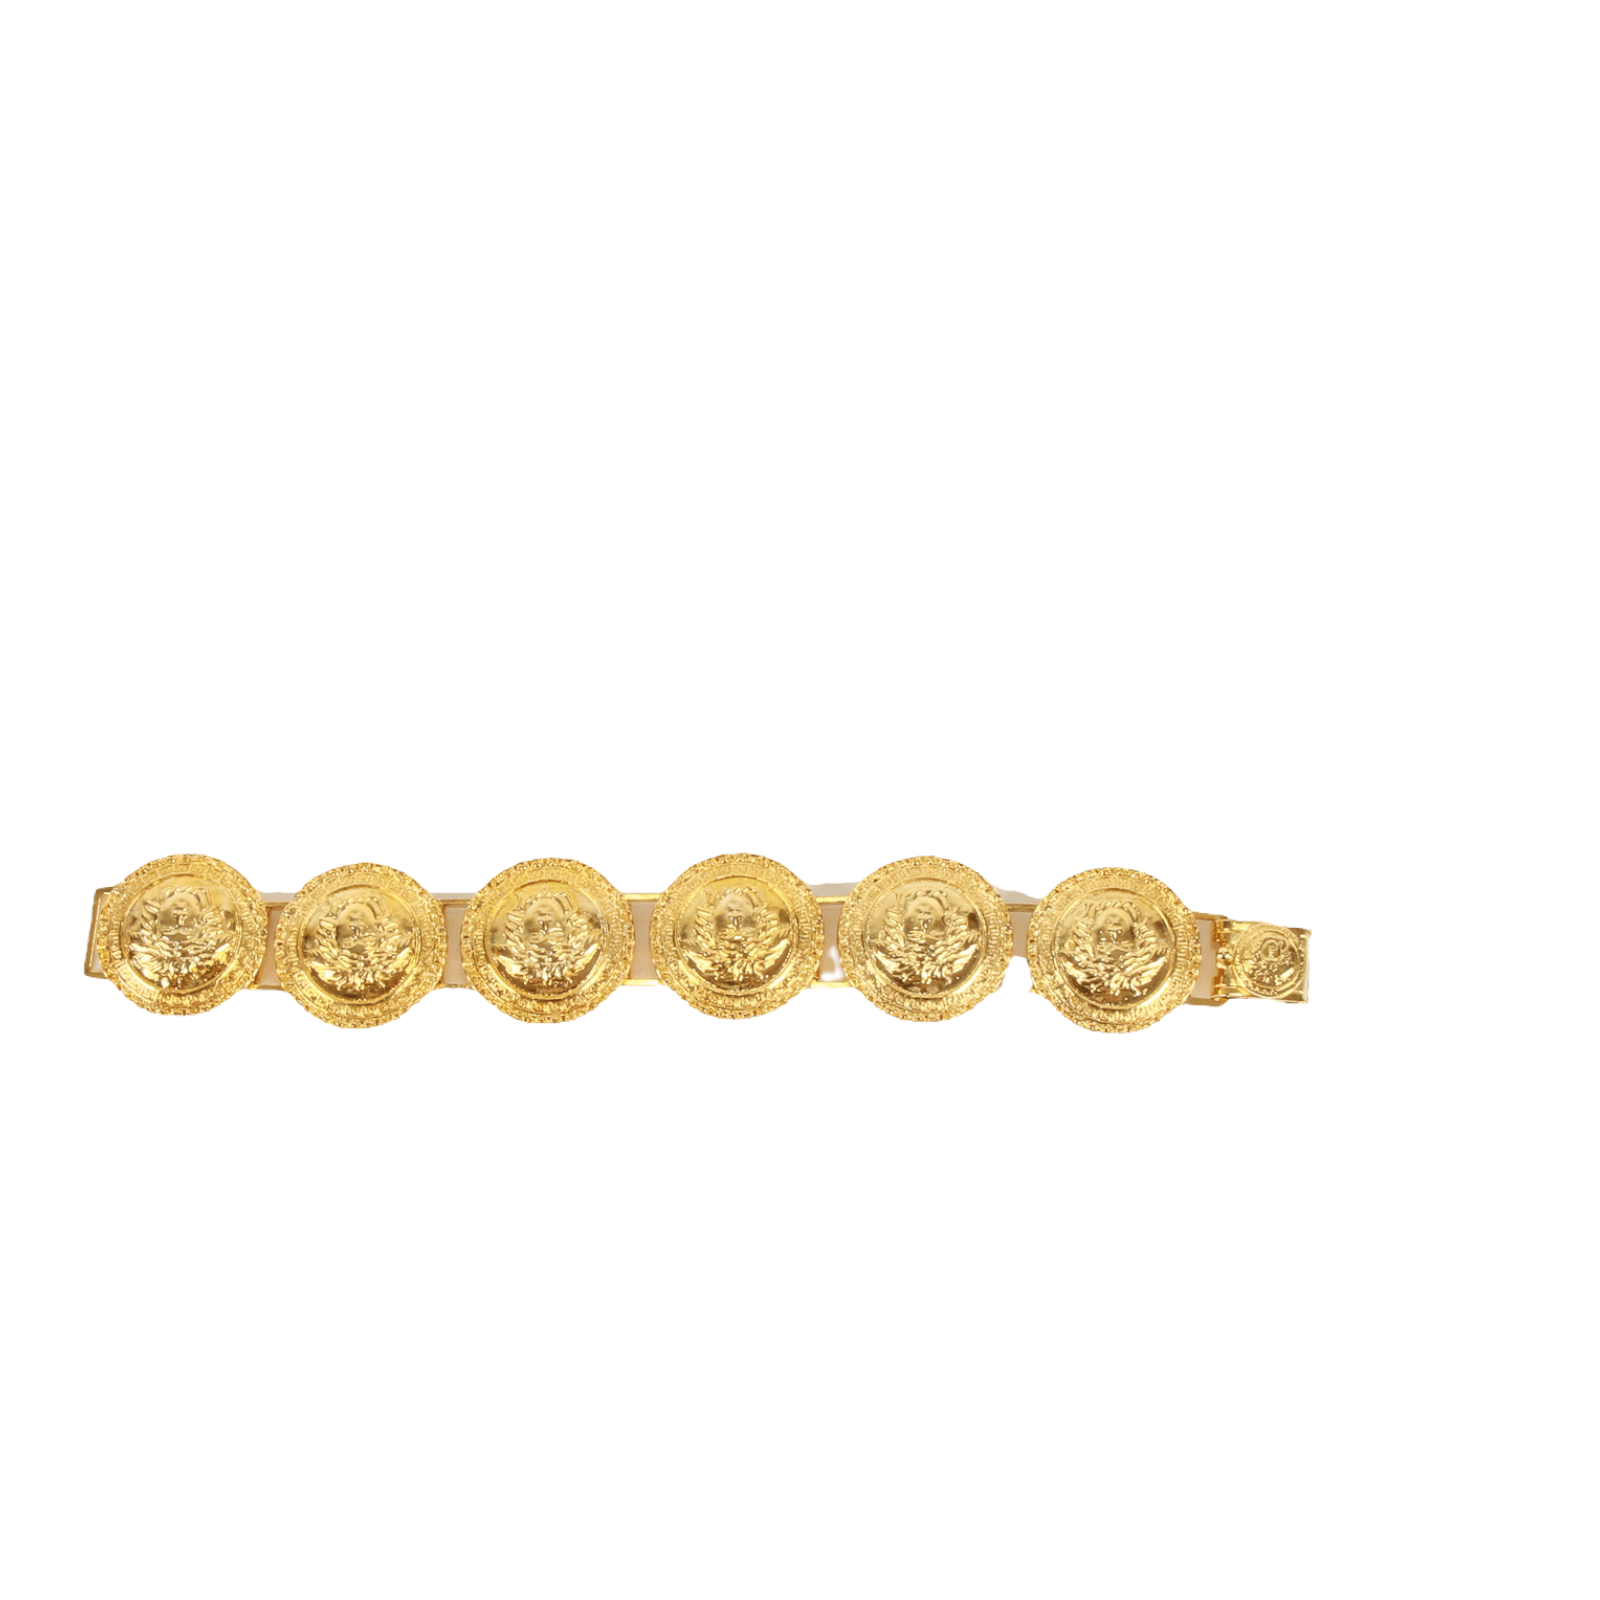 GIANNI VERSACE 18K Gold Medusa Coin Charm Bracelet #002 Limited Edition  120grams